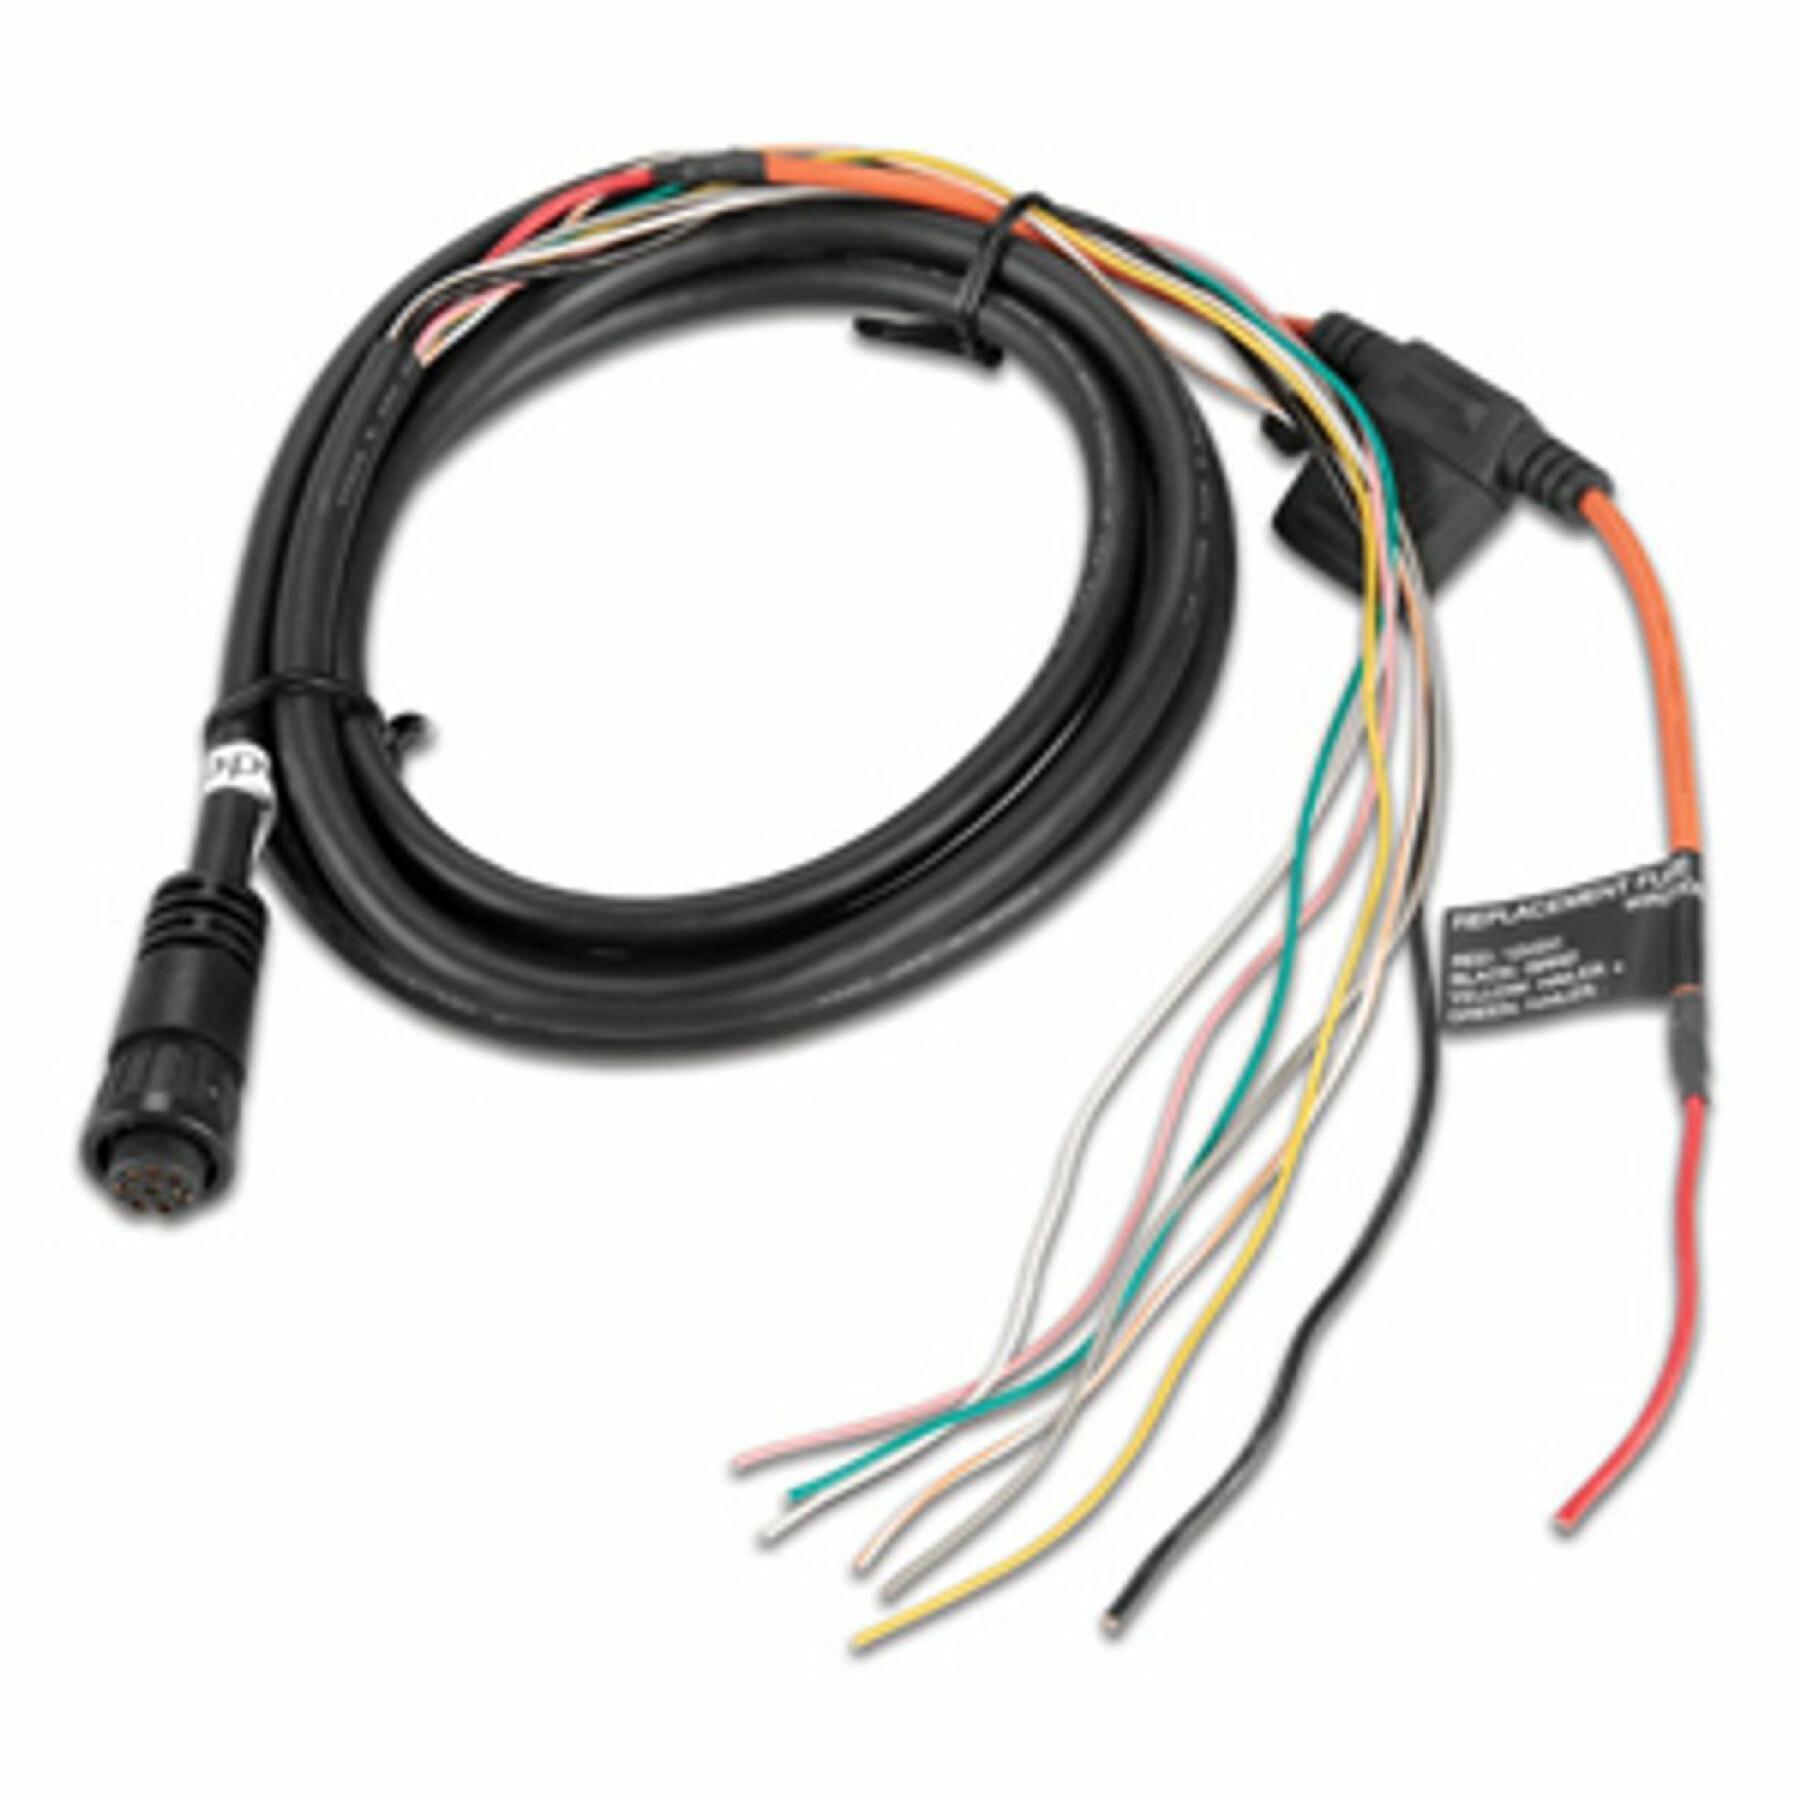 Kabel Garmin nmea 0183 power